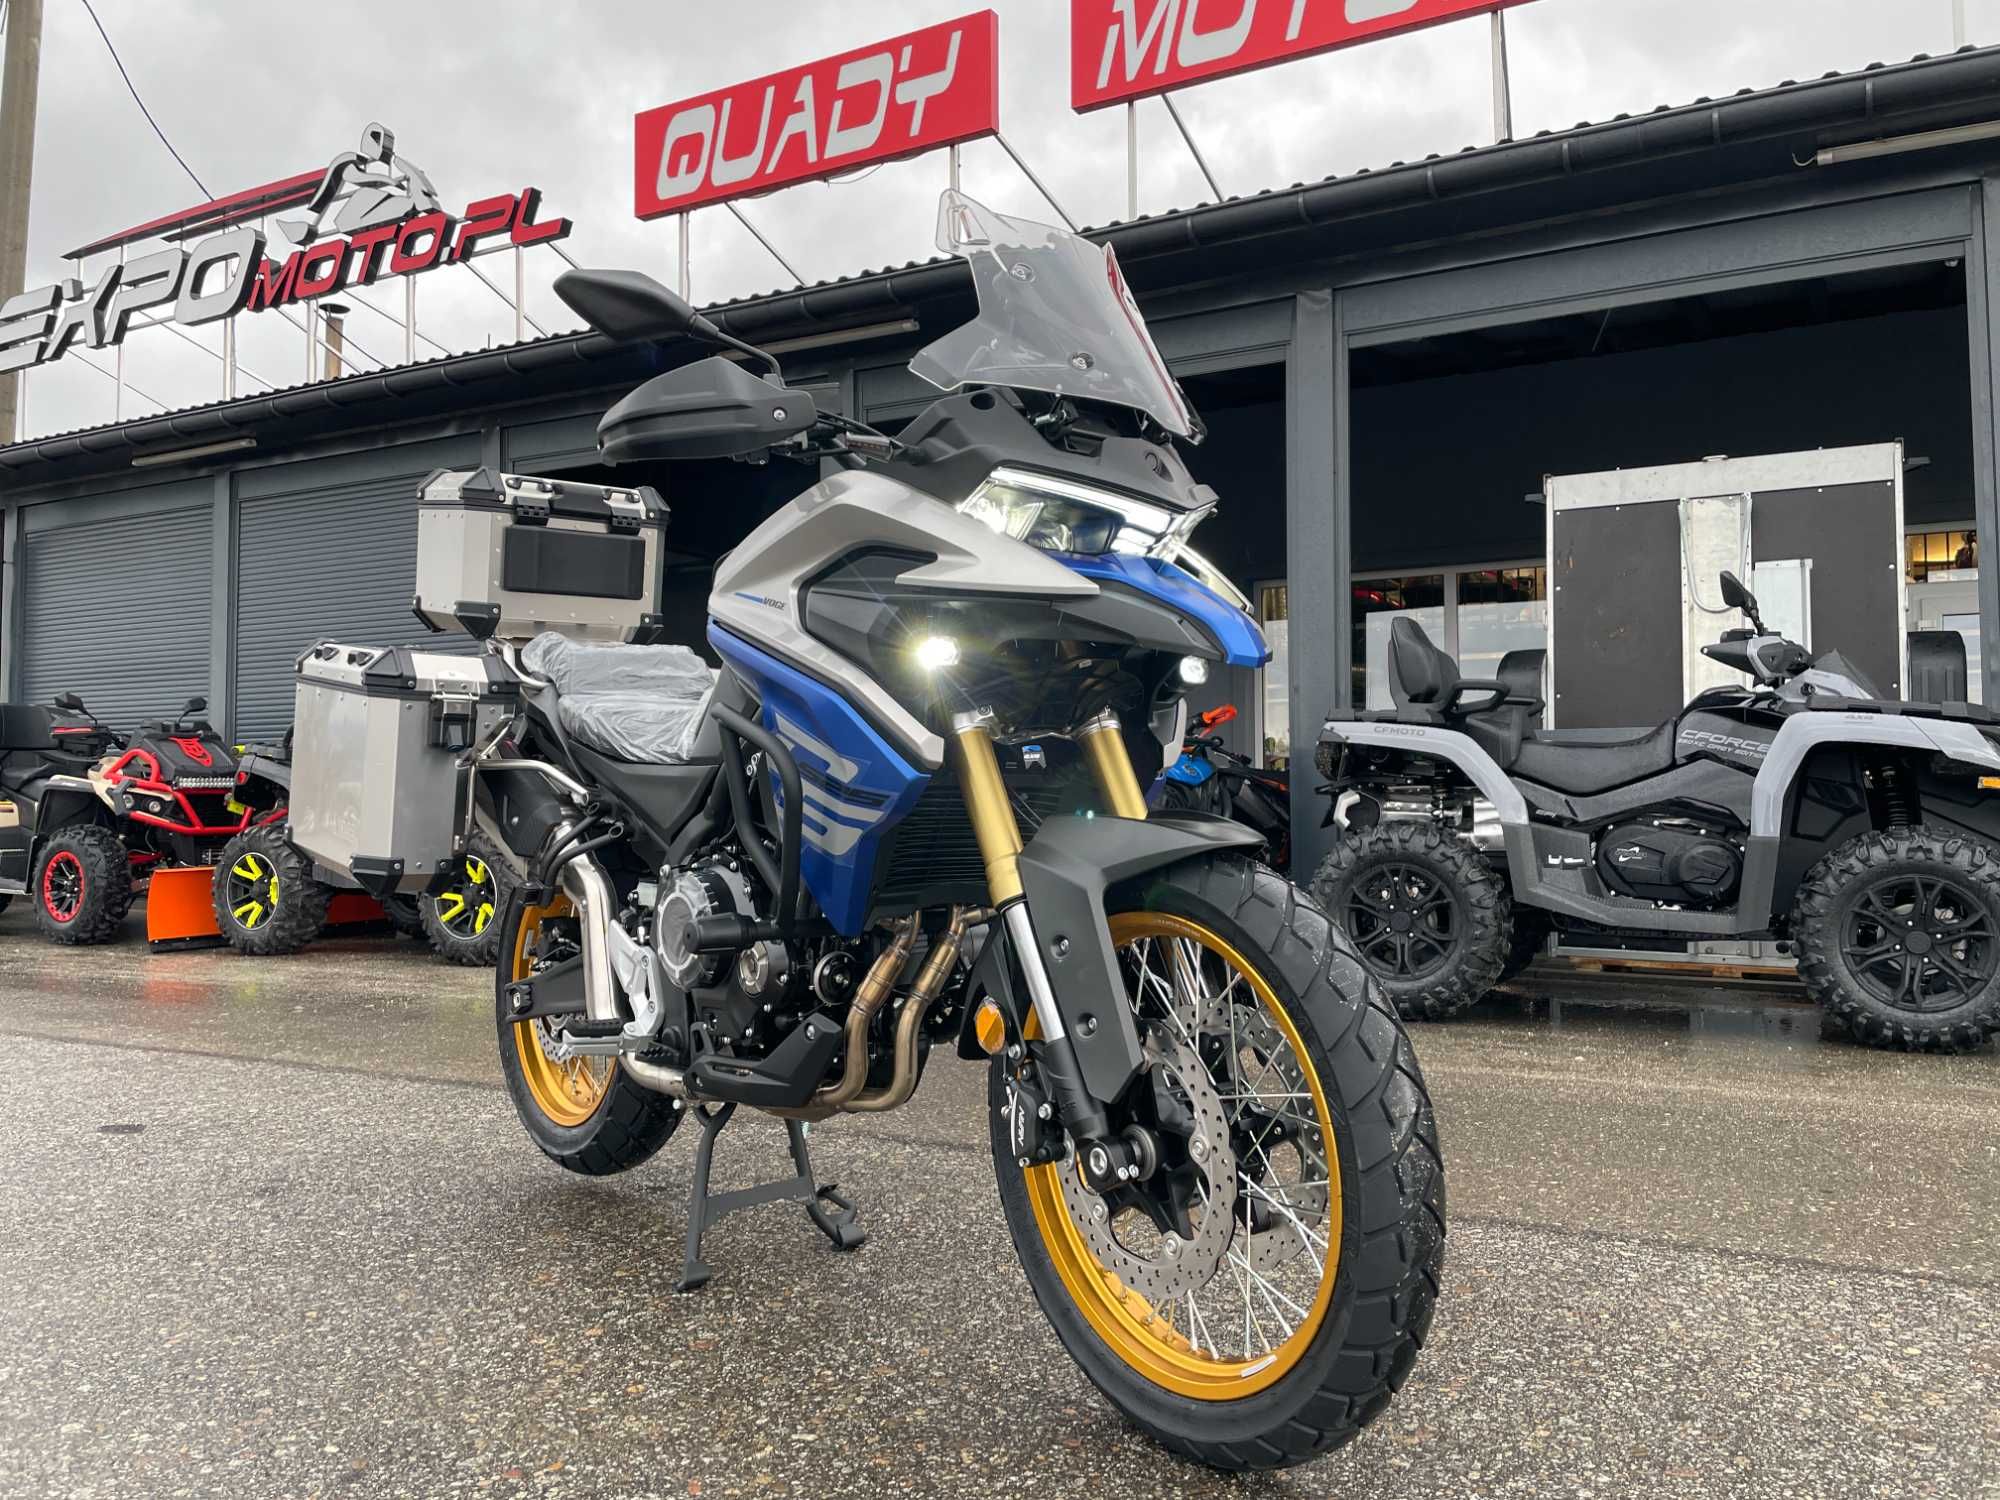 Nowy Motocykl VOGE 525DSX +KUFRY*Raty*2024r*VAT23%*Transdo150km gratis